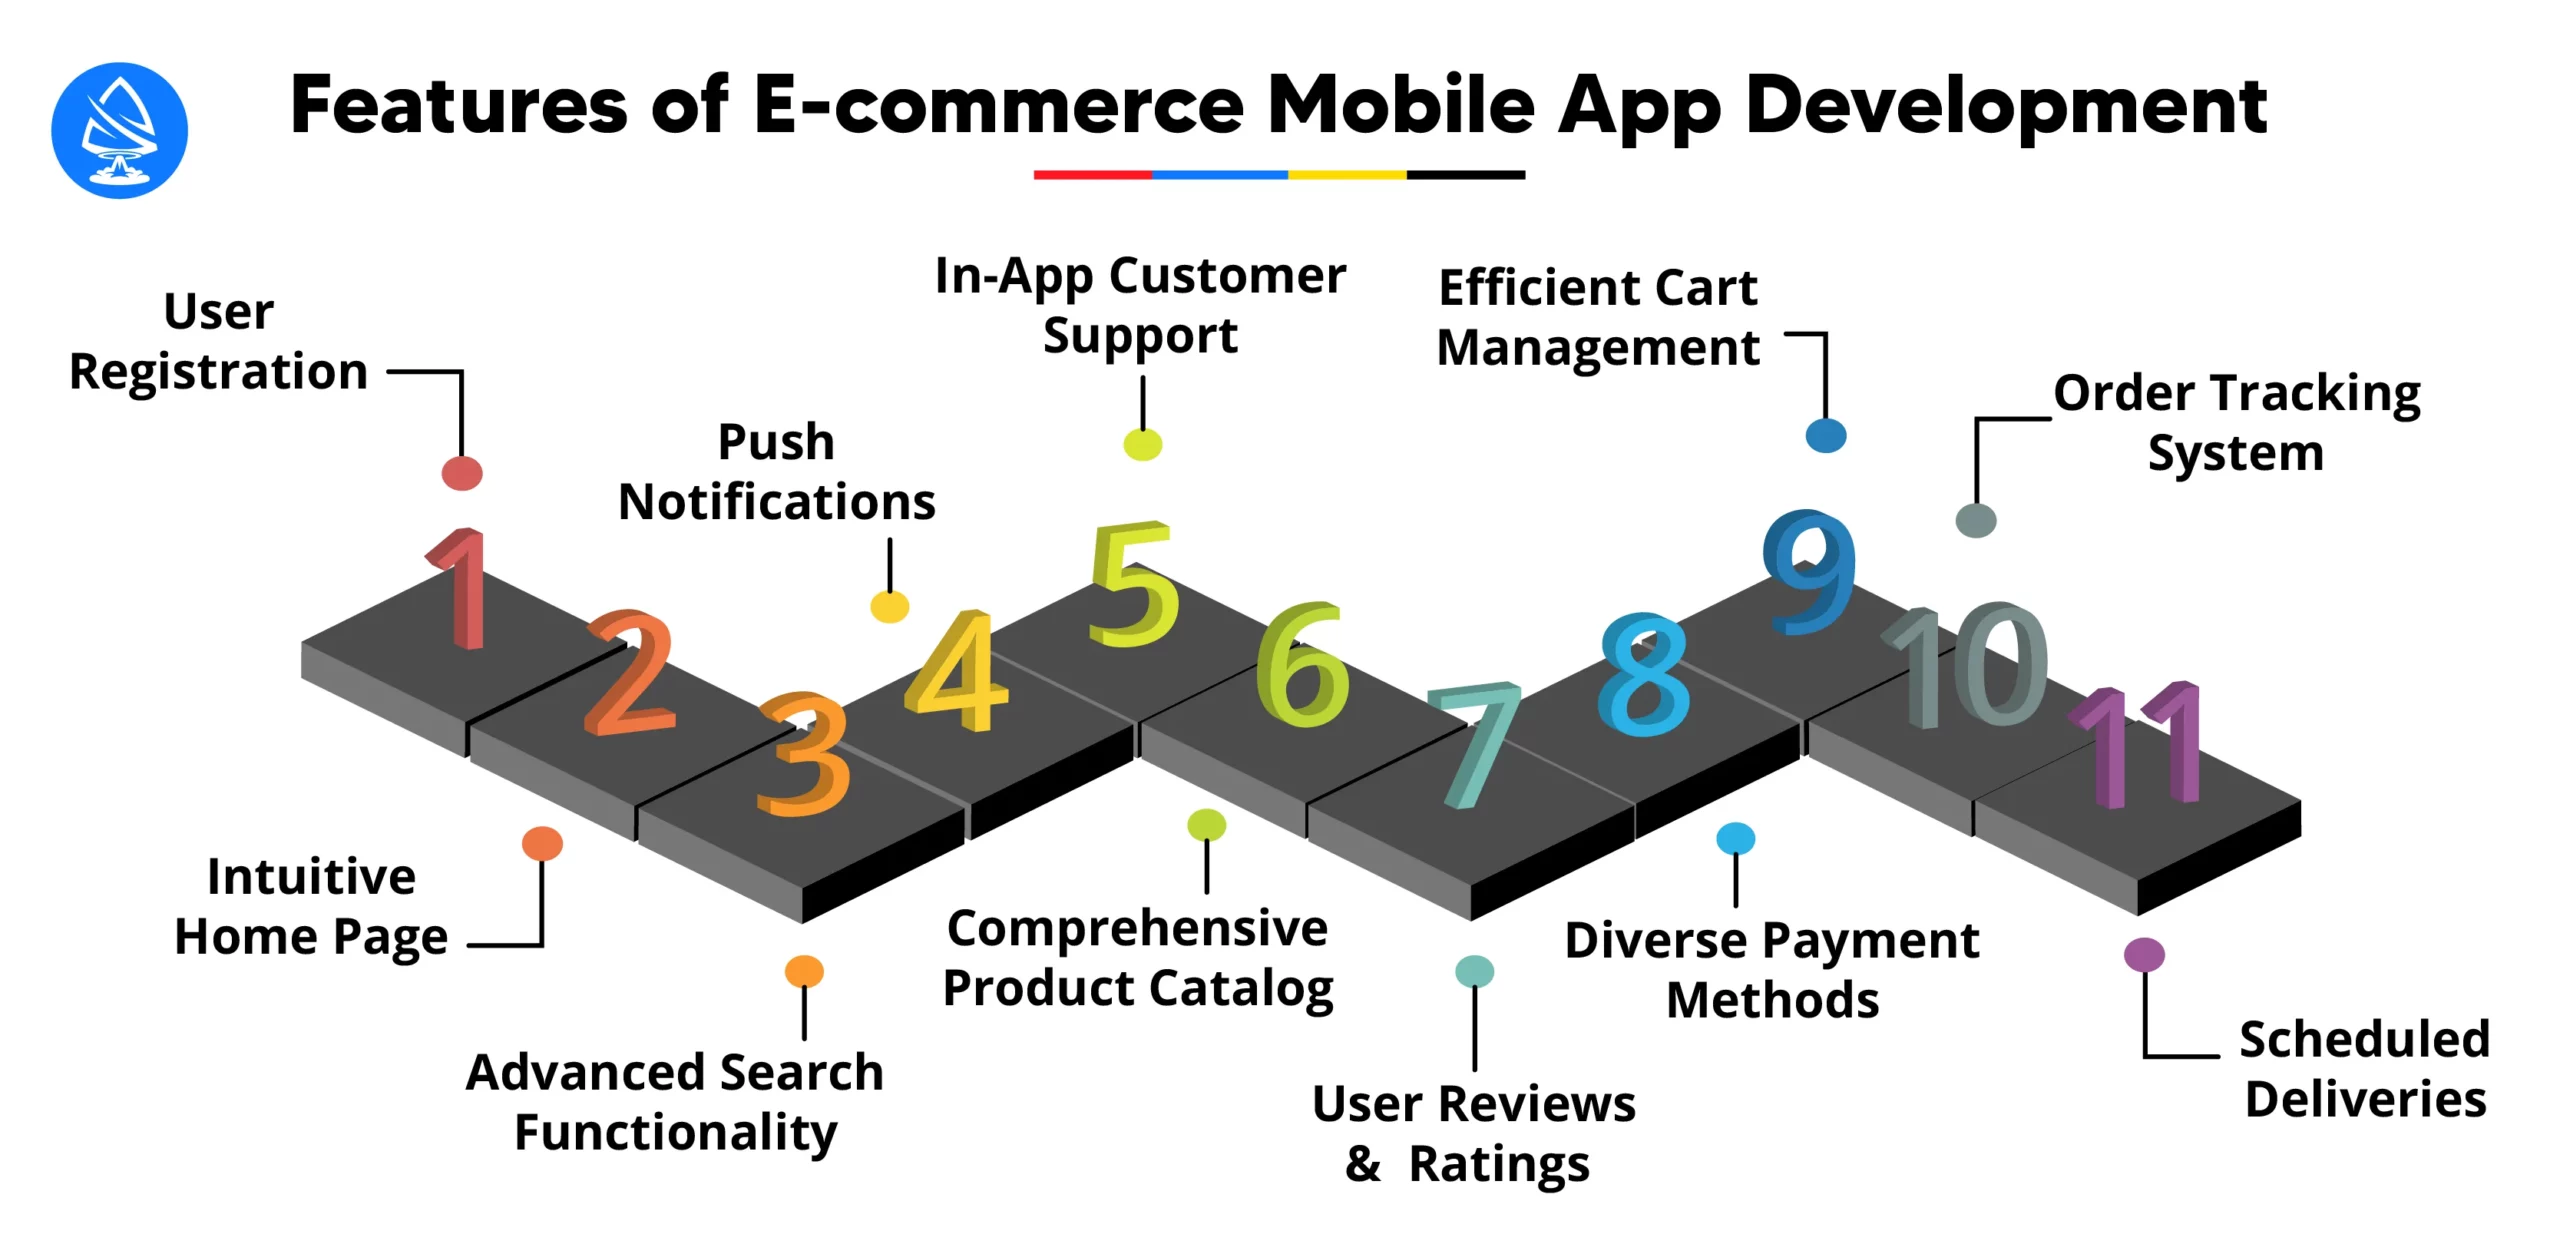 Features of E-commerce Mobile App Development